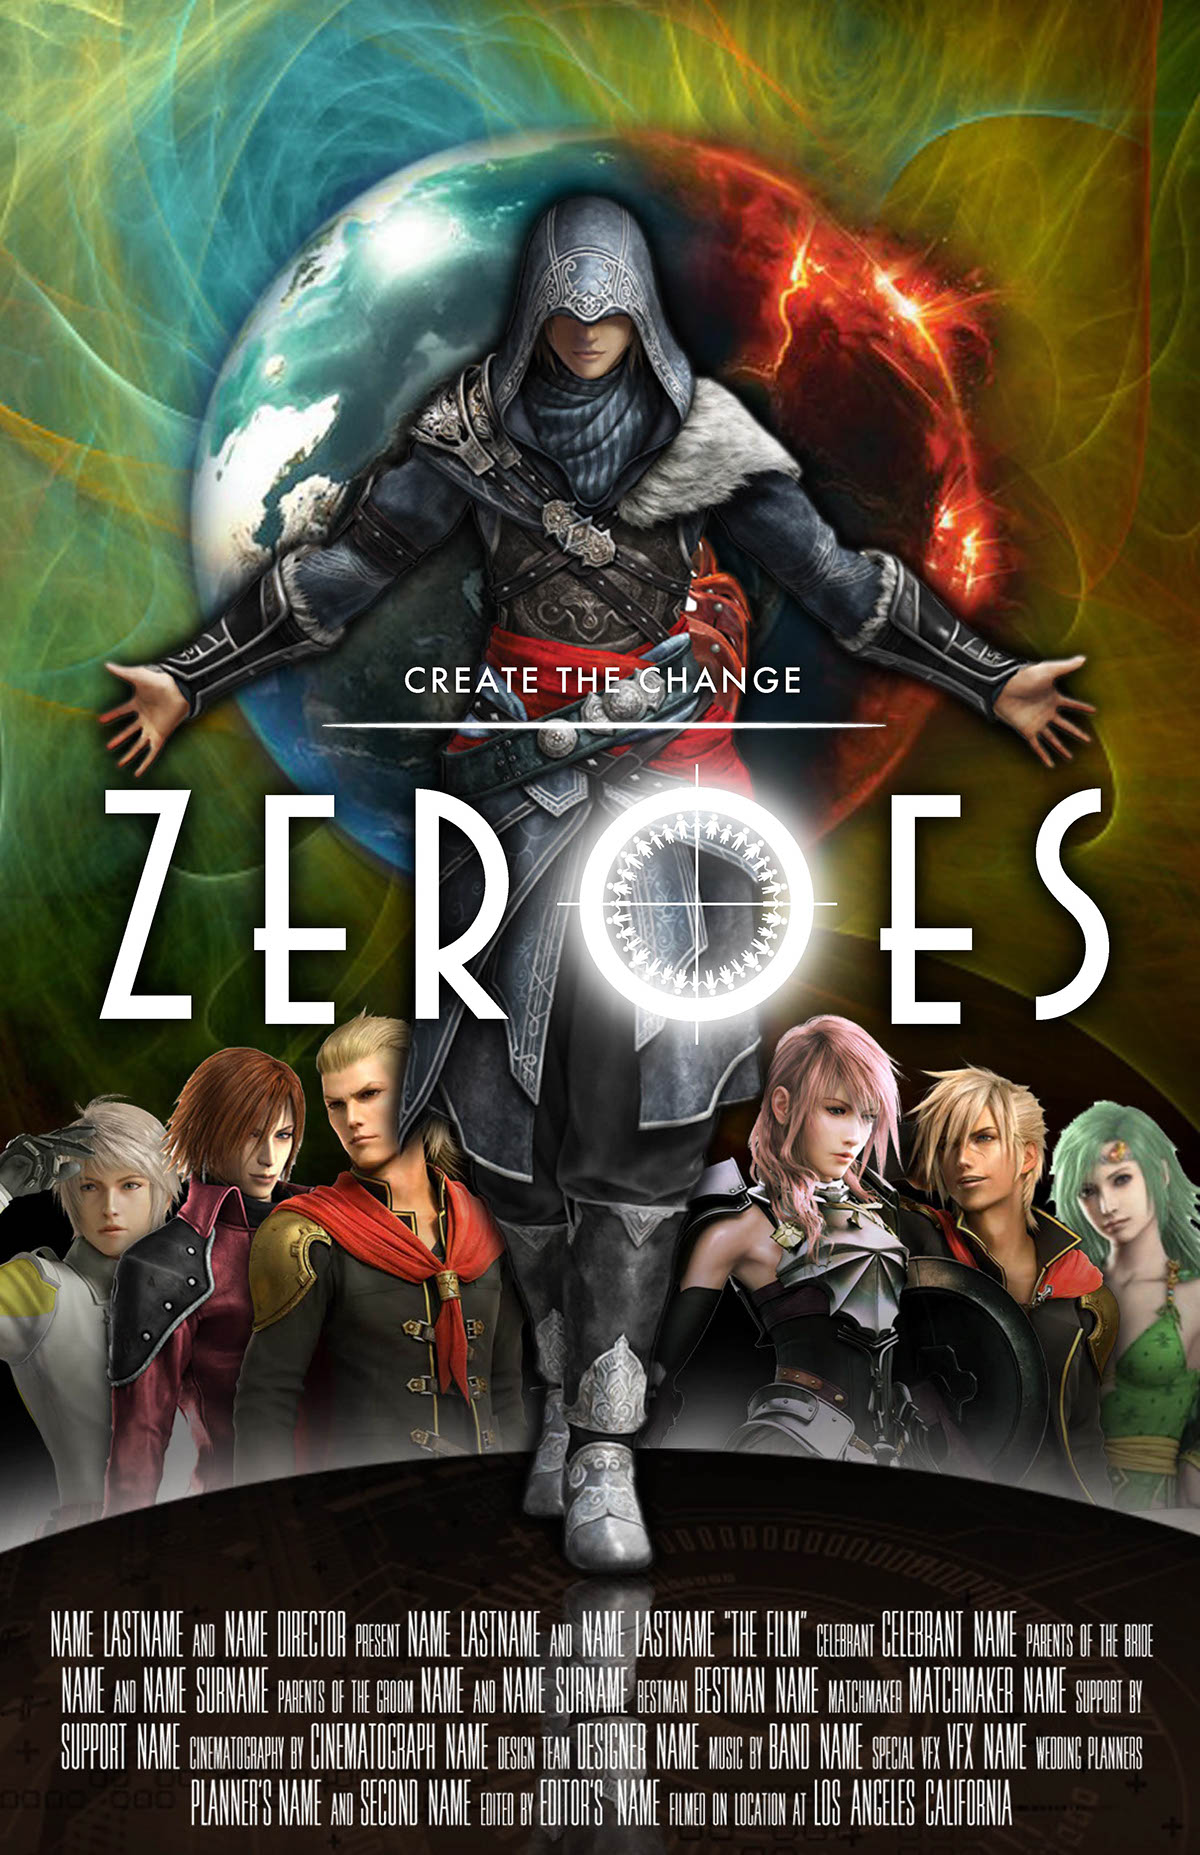 zeroes feature film movie heroes design poster Logo Design Super Hero environmental earth indie film